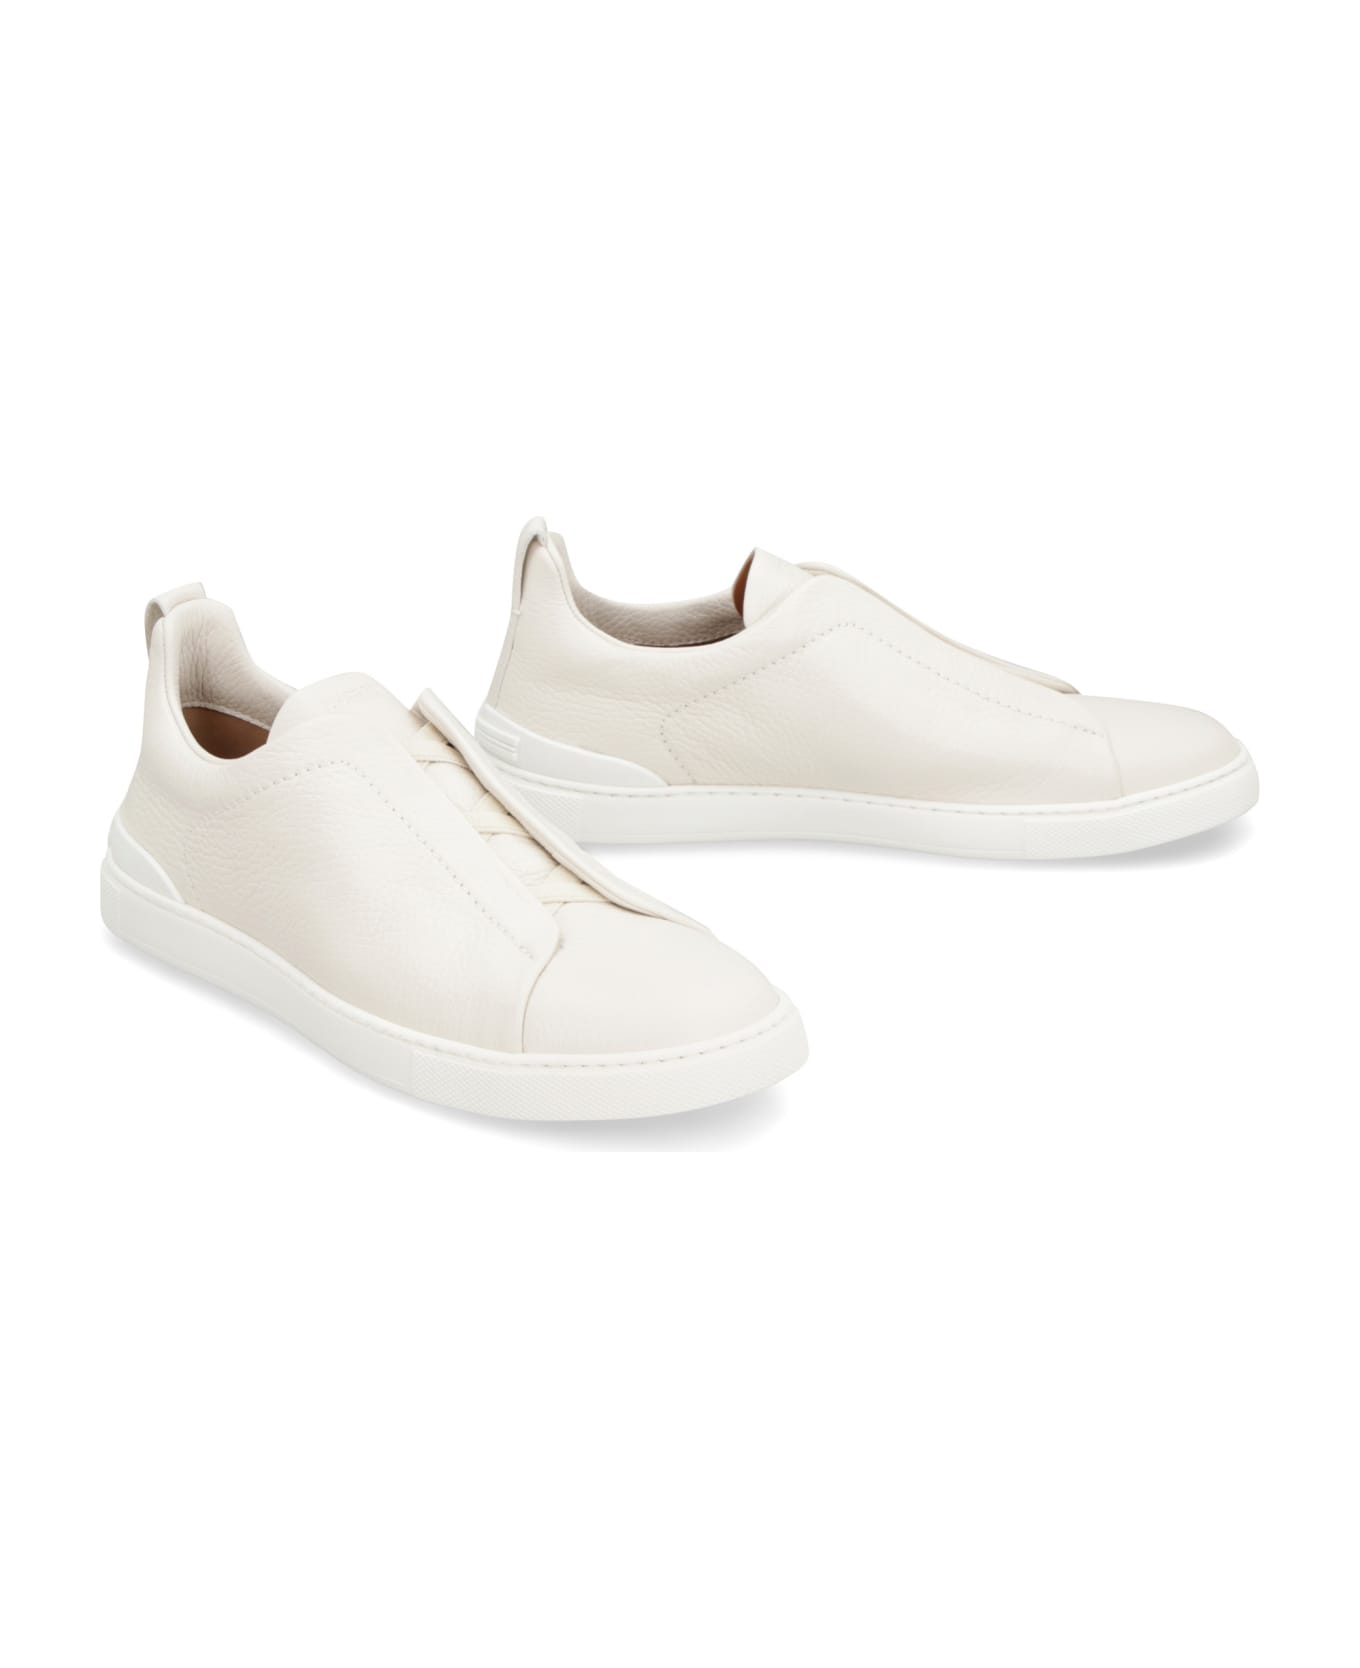 Zegna Triple Stitch Leather Sneakers - White